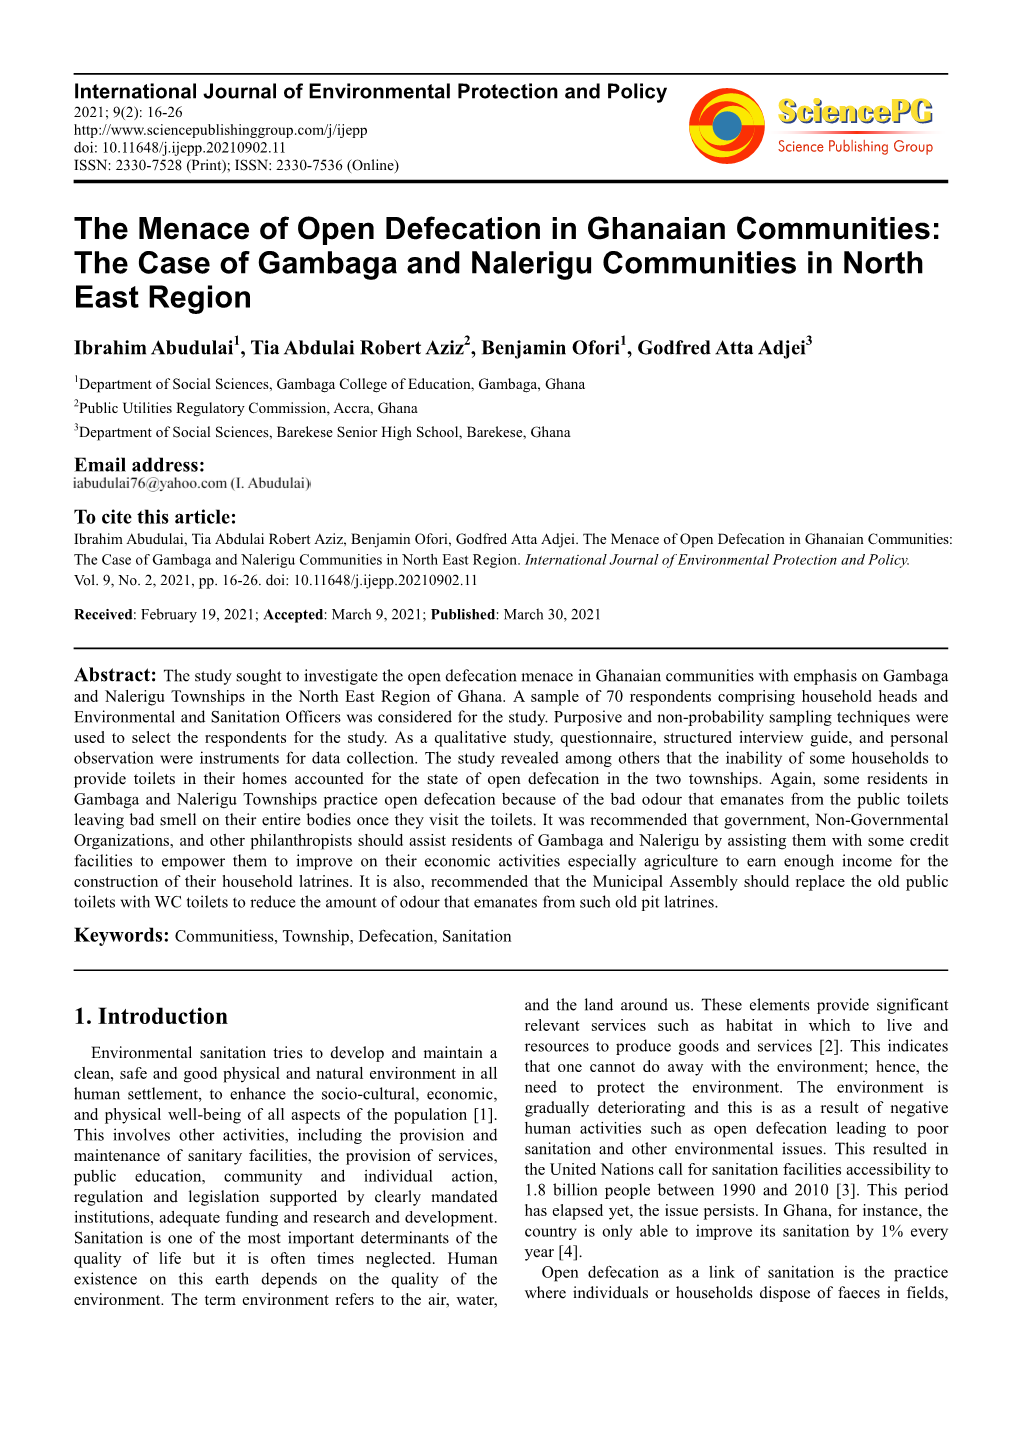 The Case of Gambaga and Nalerigu Communities in North East Region